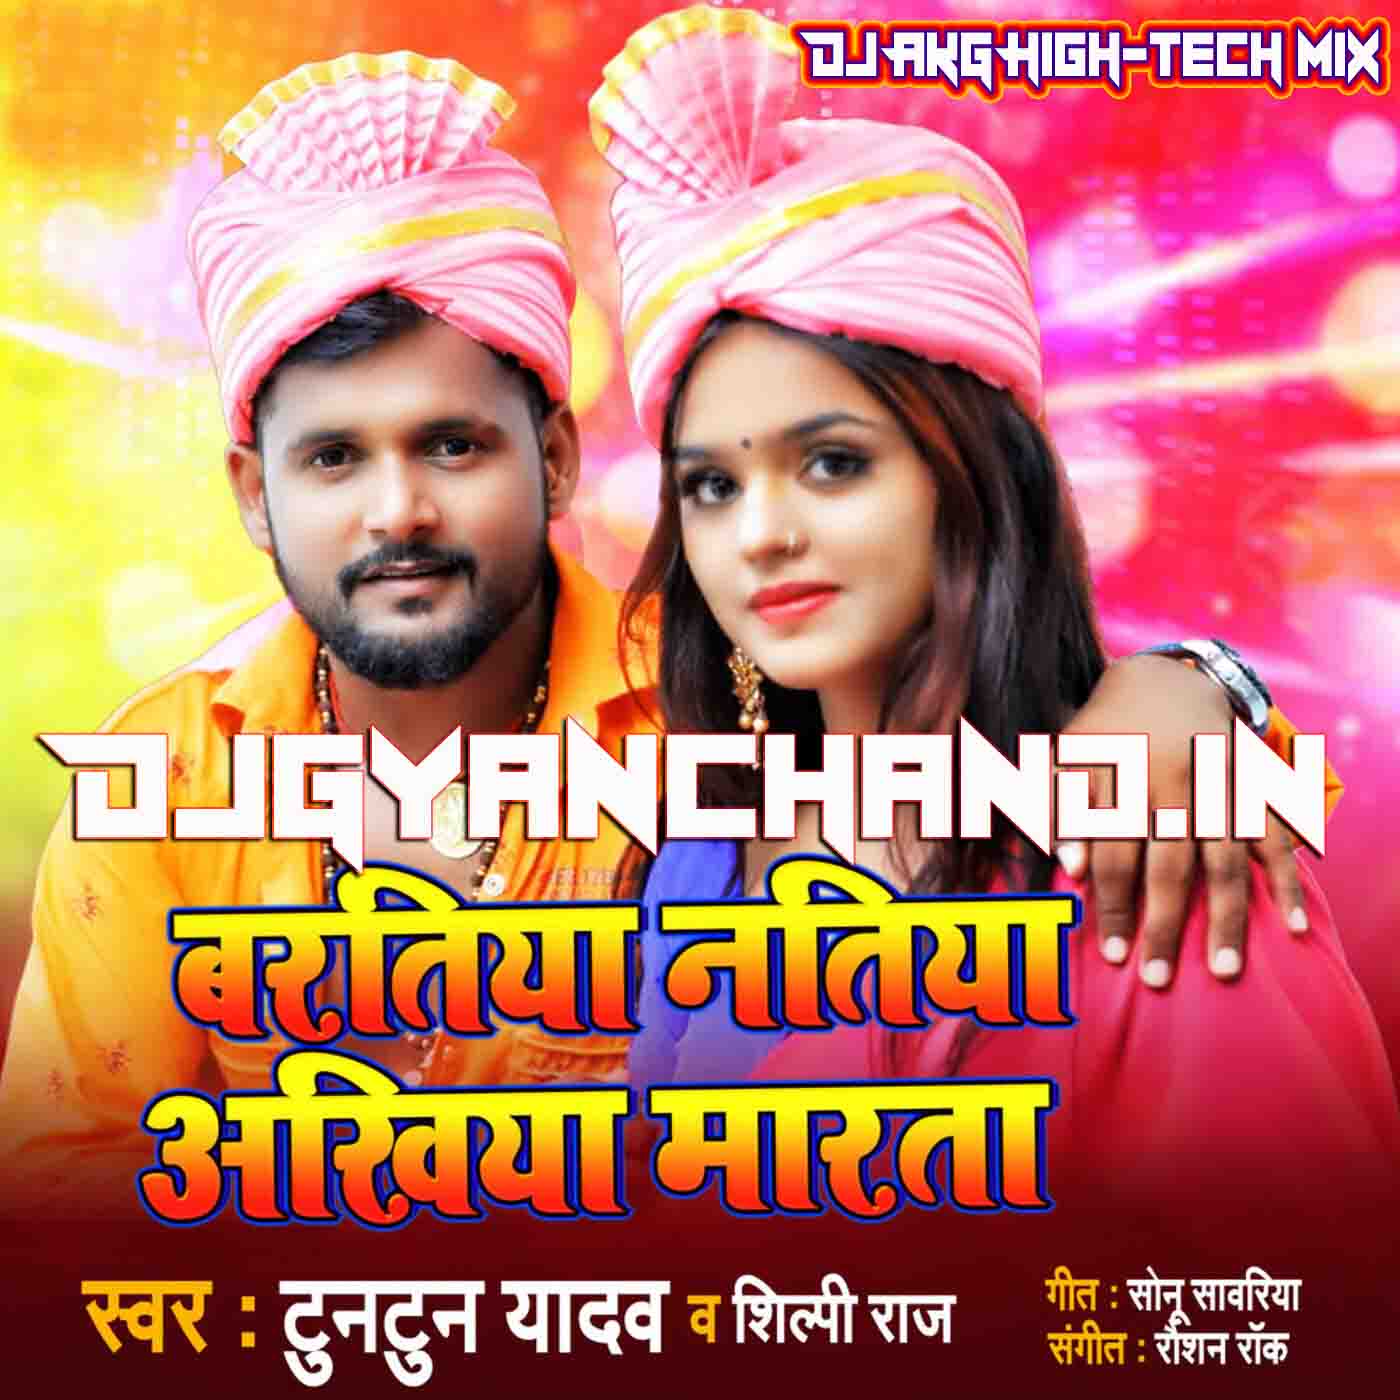 Baratiya Natiya Ankhiya Marata Shilpi Raj Bhojpuri Mp3 Dj Song ( Hard Dholki Retro Mix ) - Dj AkG High-Tech x Dj Gyanchand